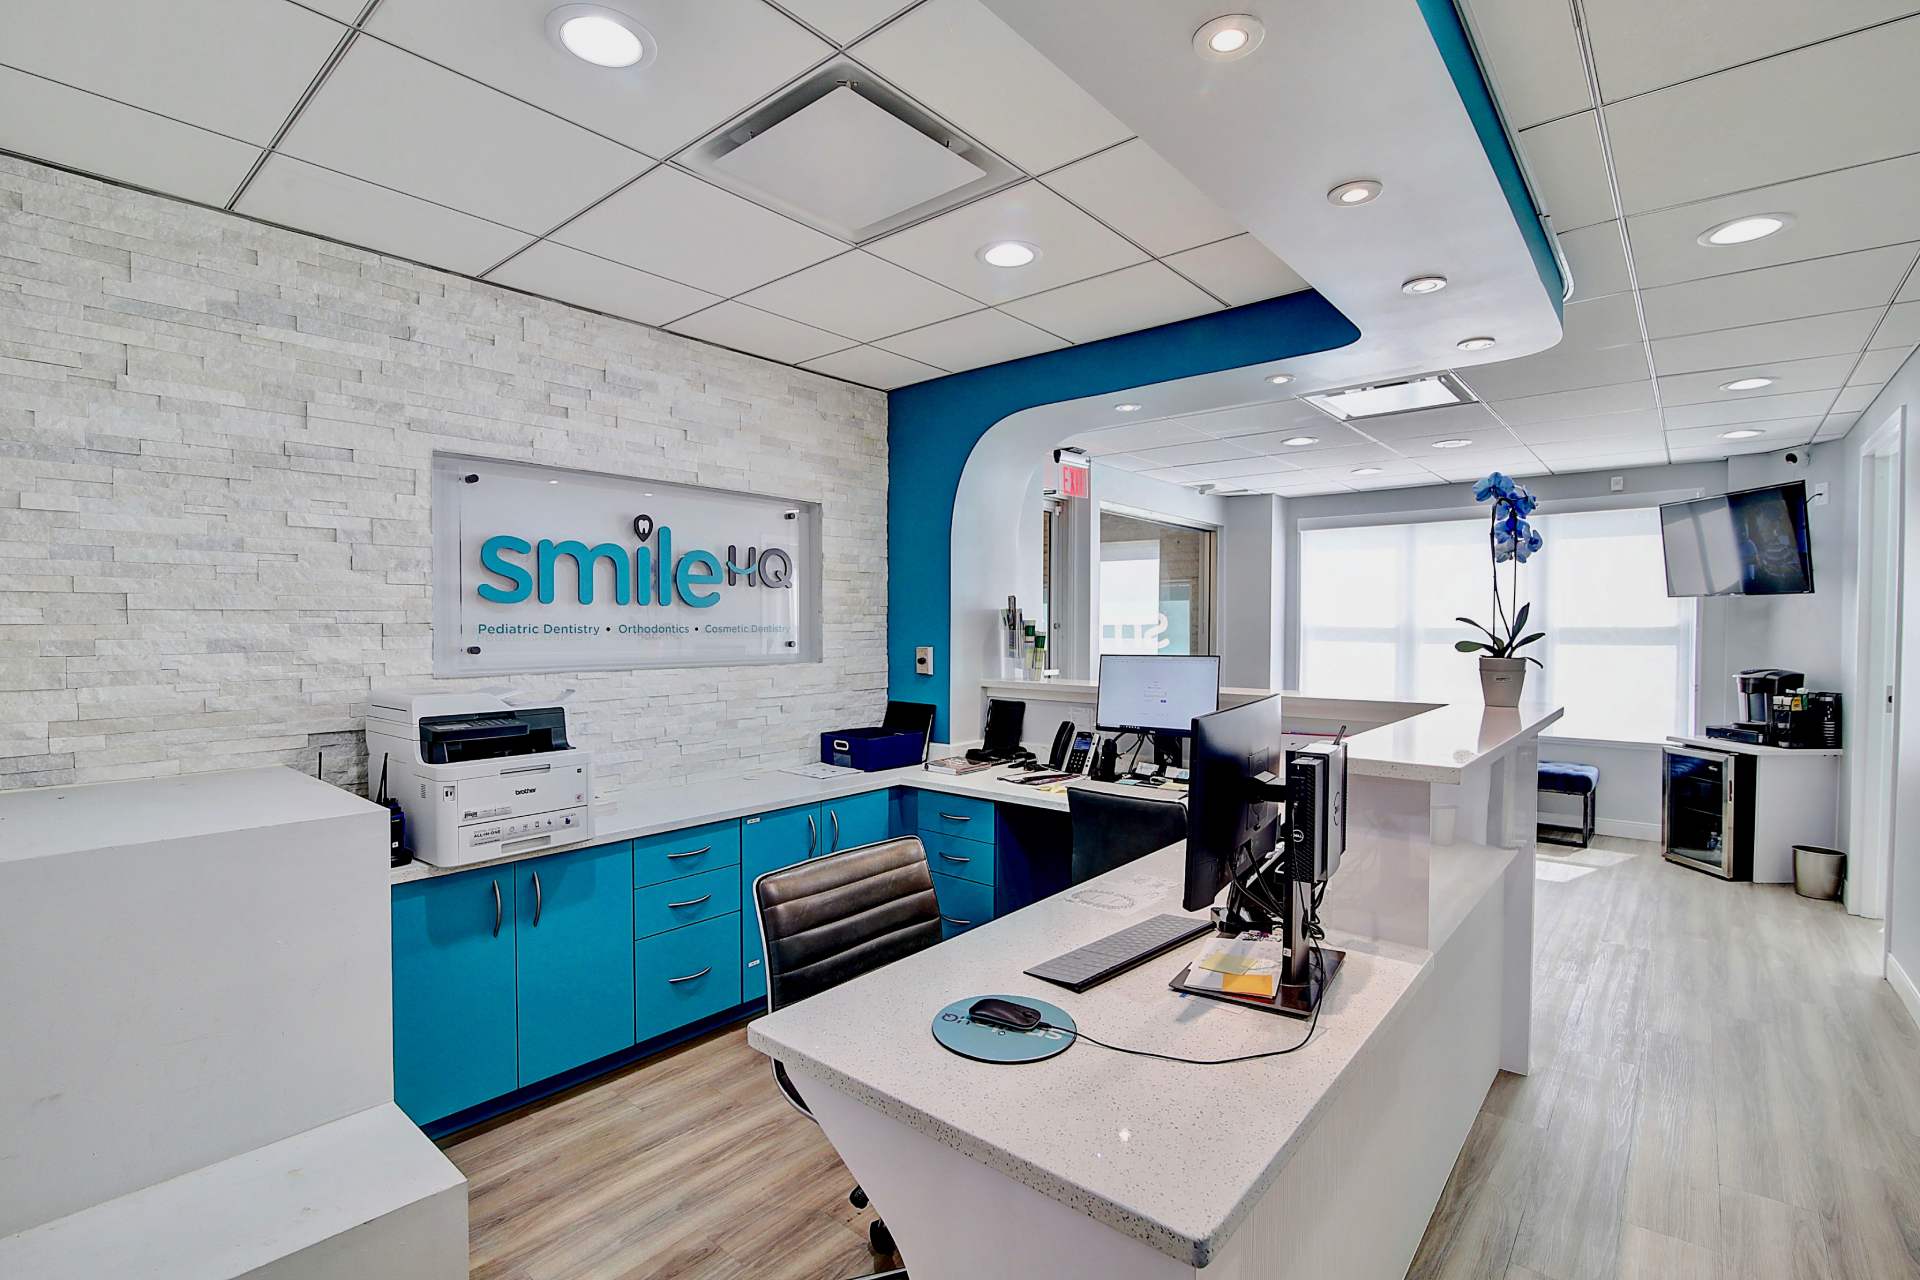 smileHQ front desk area